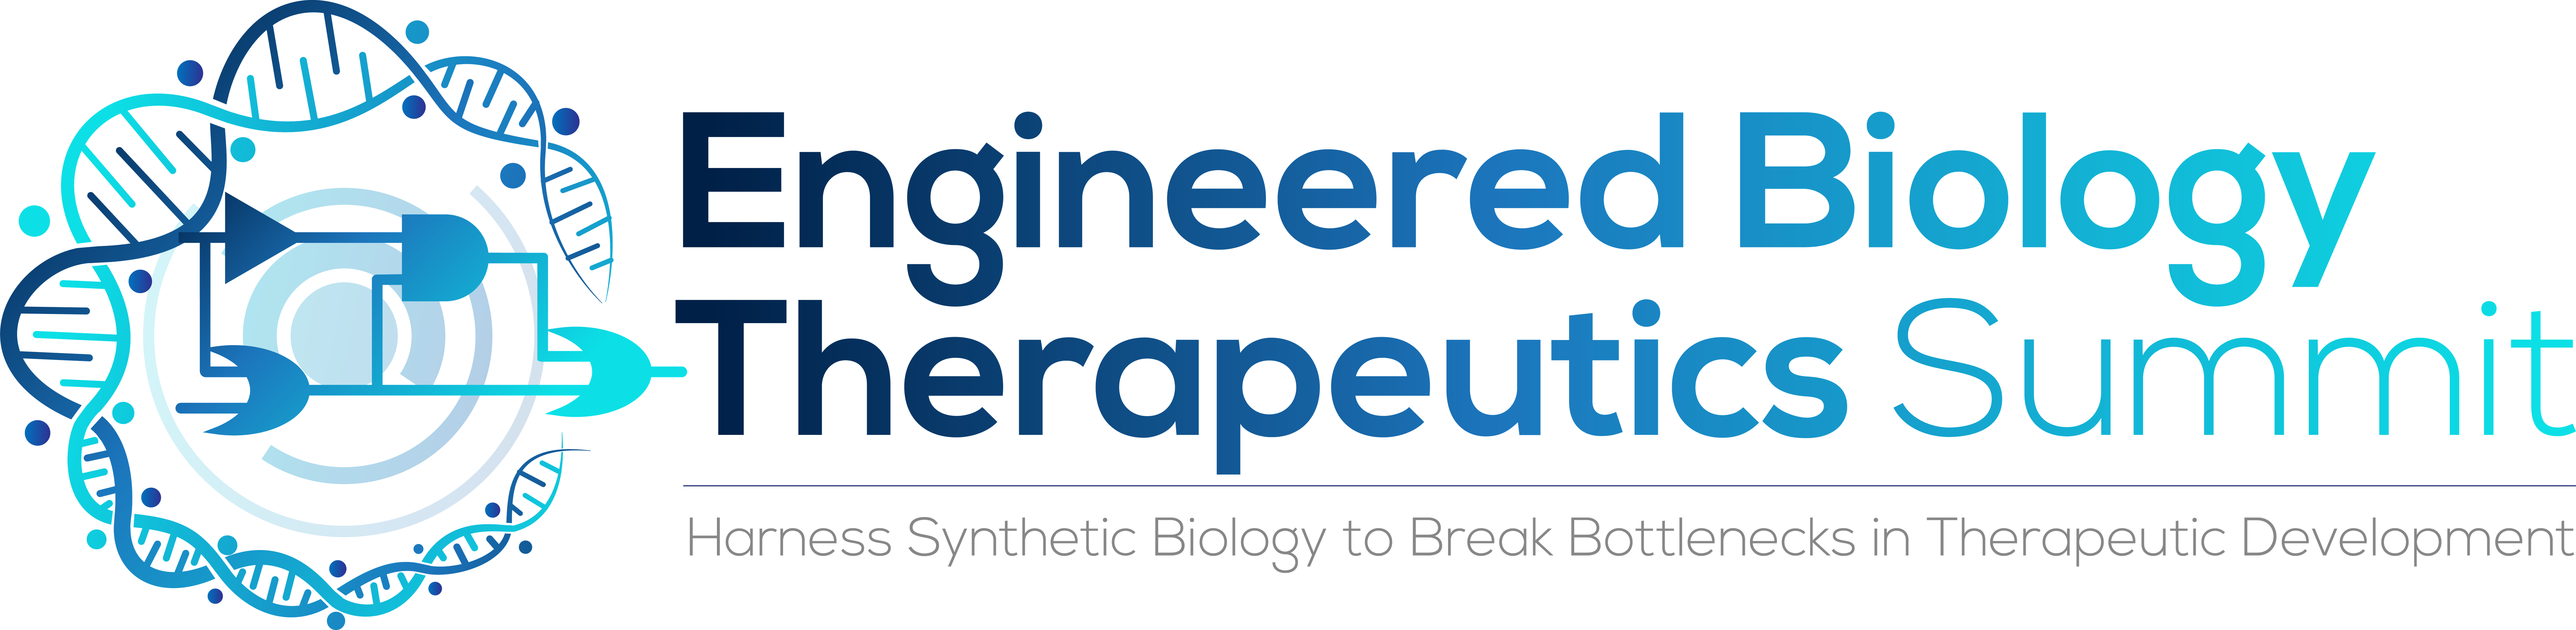 Engineered Biology Therapeutics Summit logo